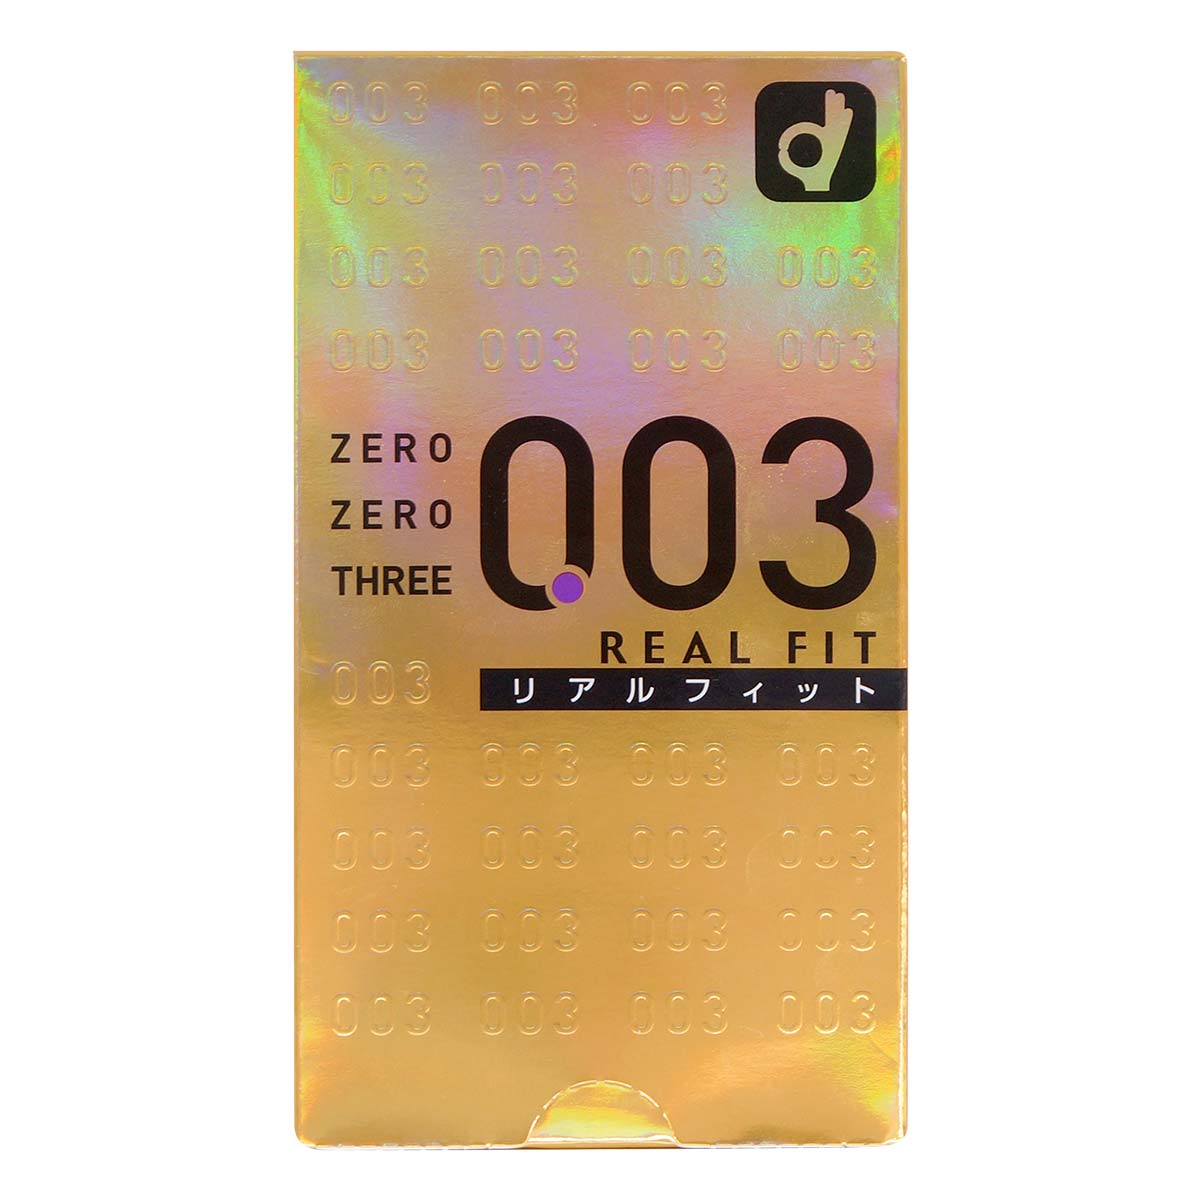 Zero Zero Three 0.03 Real Fit (Japan Edition) 10's Pack Latex Condom (Short Expiry)-p_2